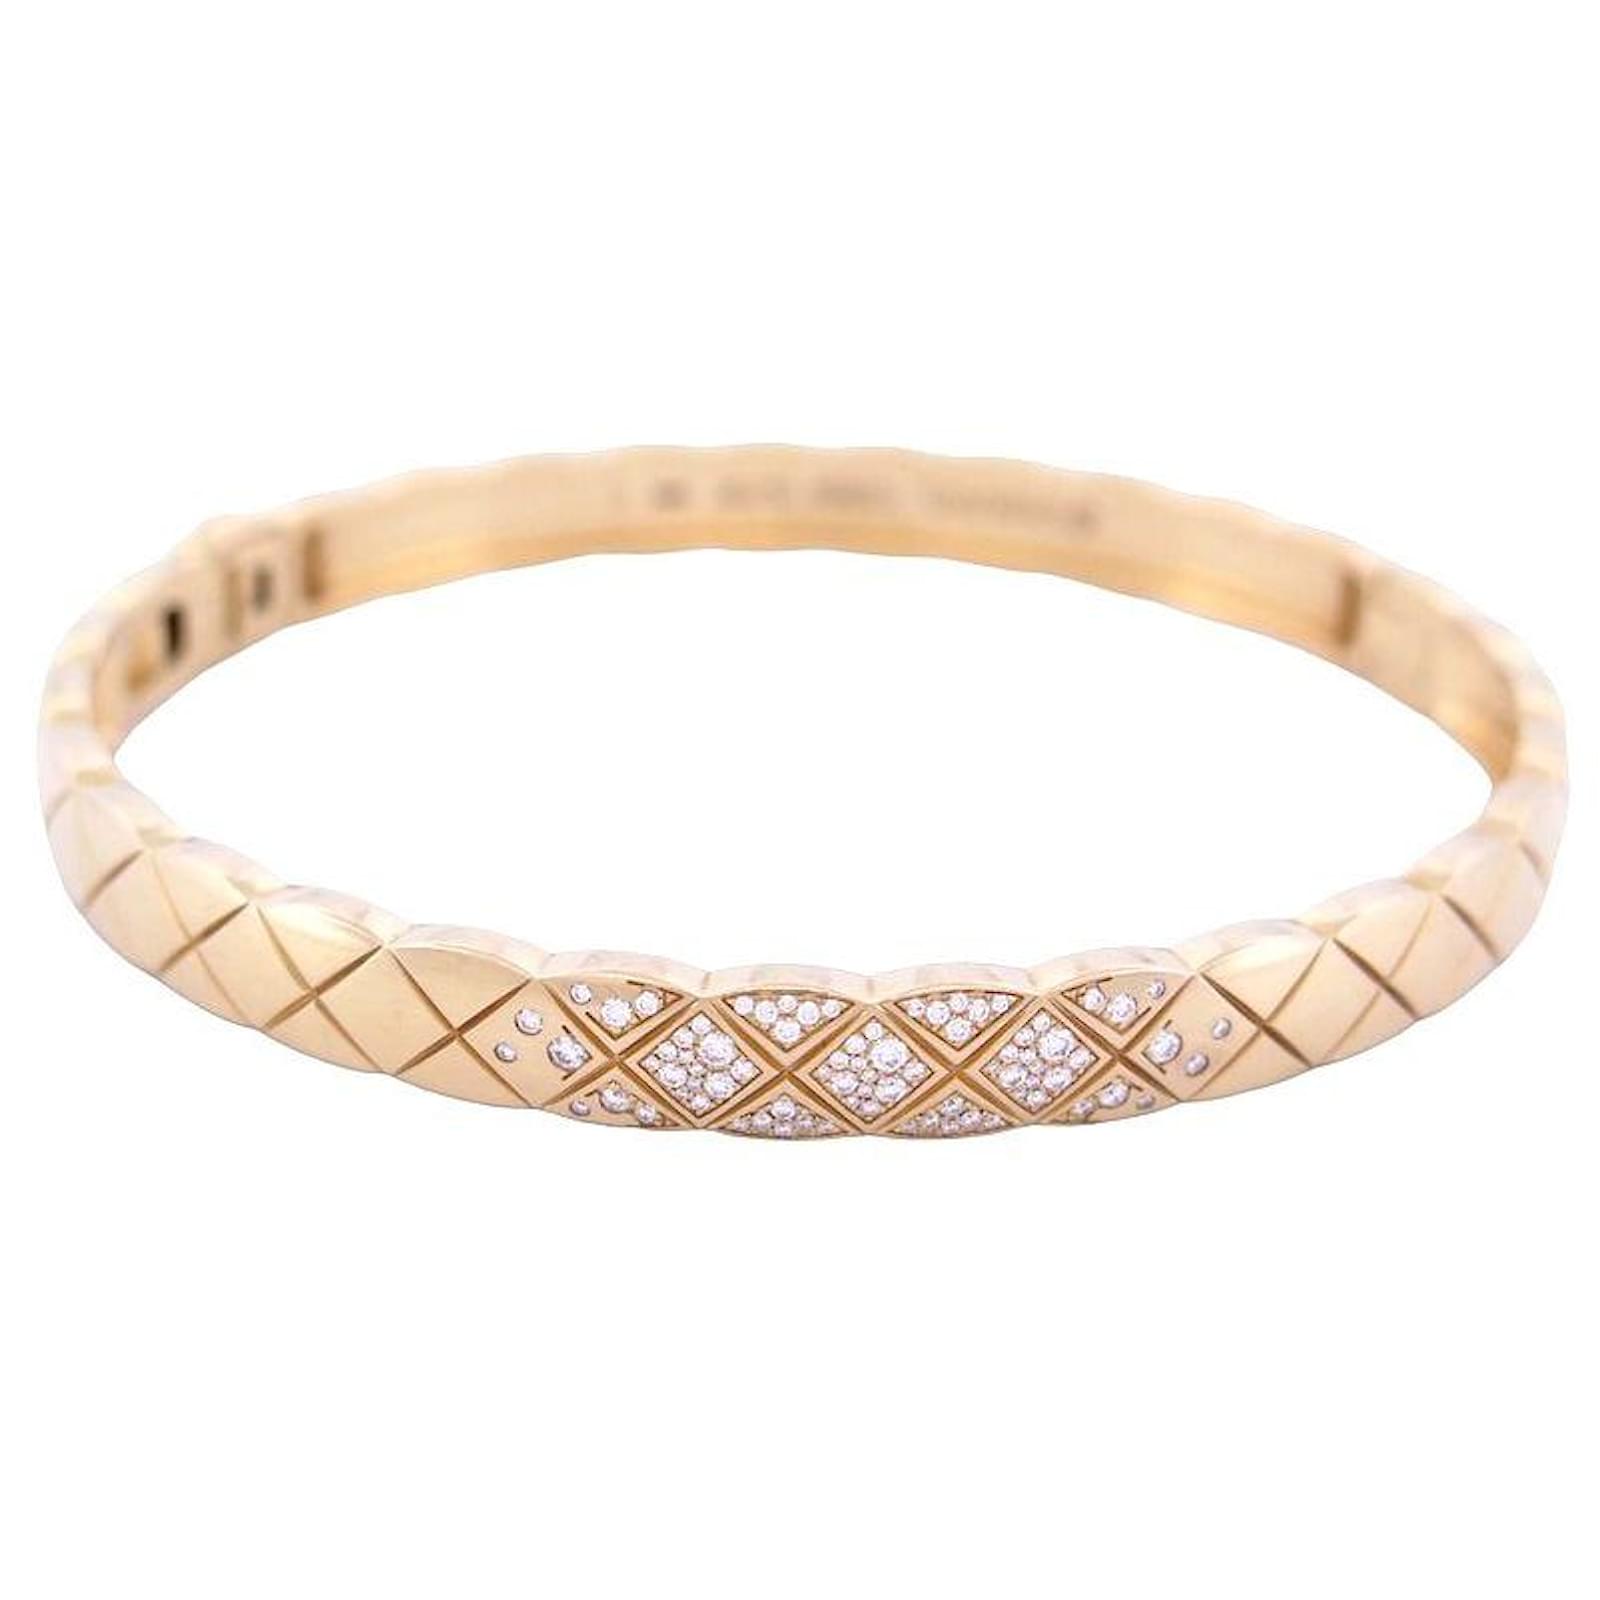 Bracelets Chanel Chanel Coco Crush Matelasse J BRACELET11763 20 Yellow Gold & Diamonds Strap